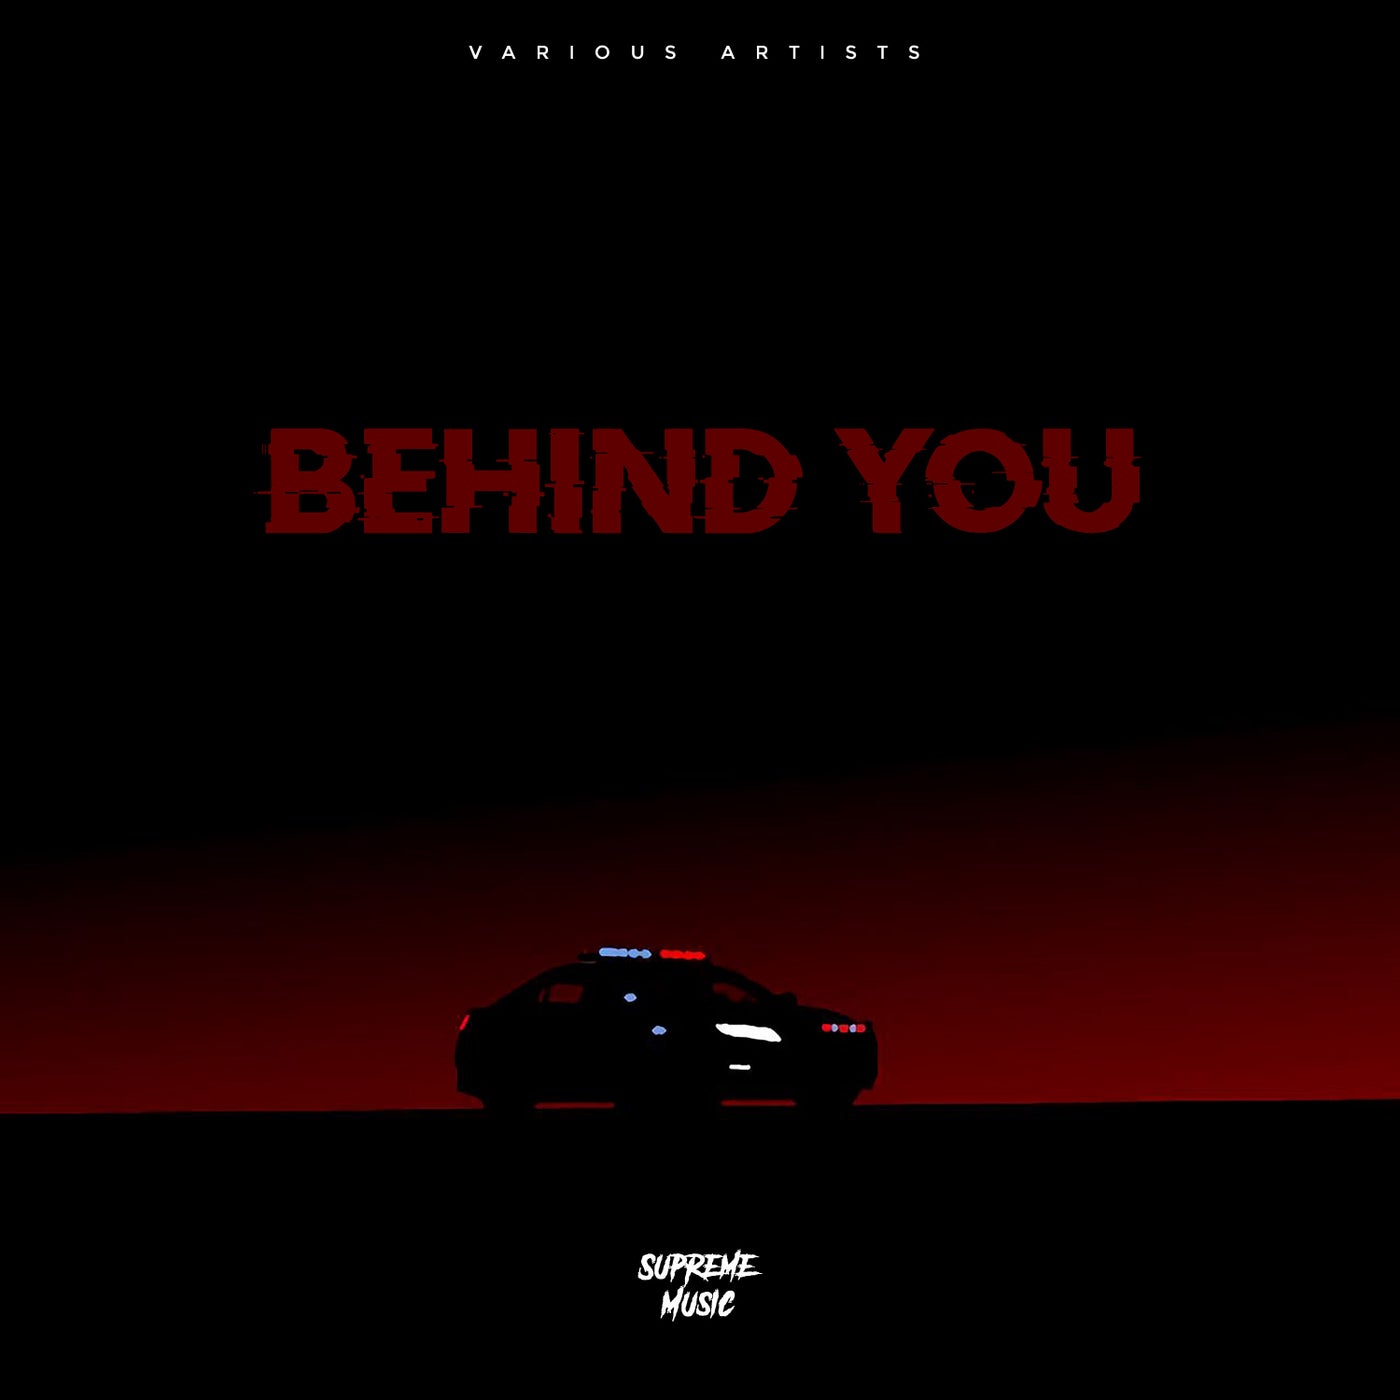 Behind You